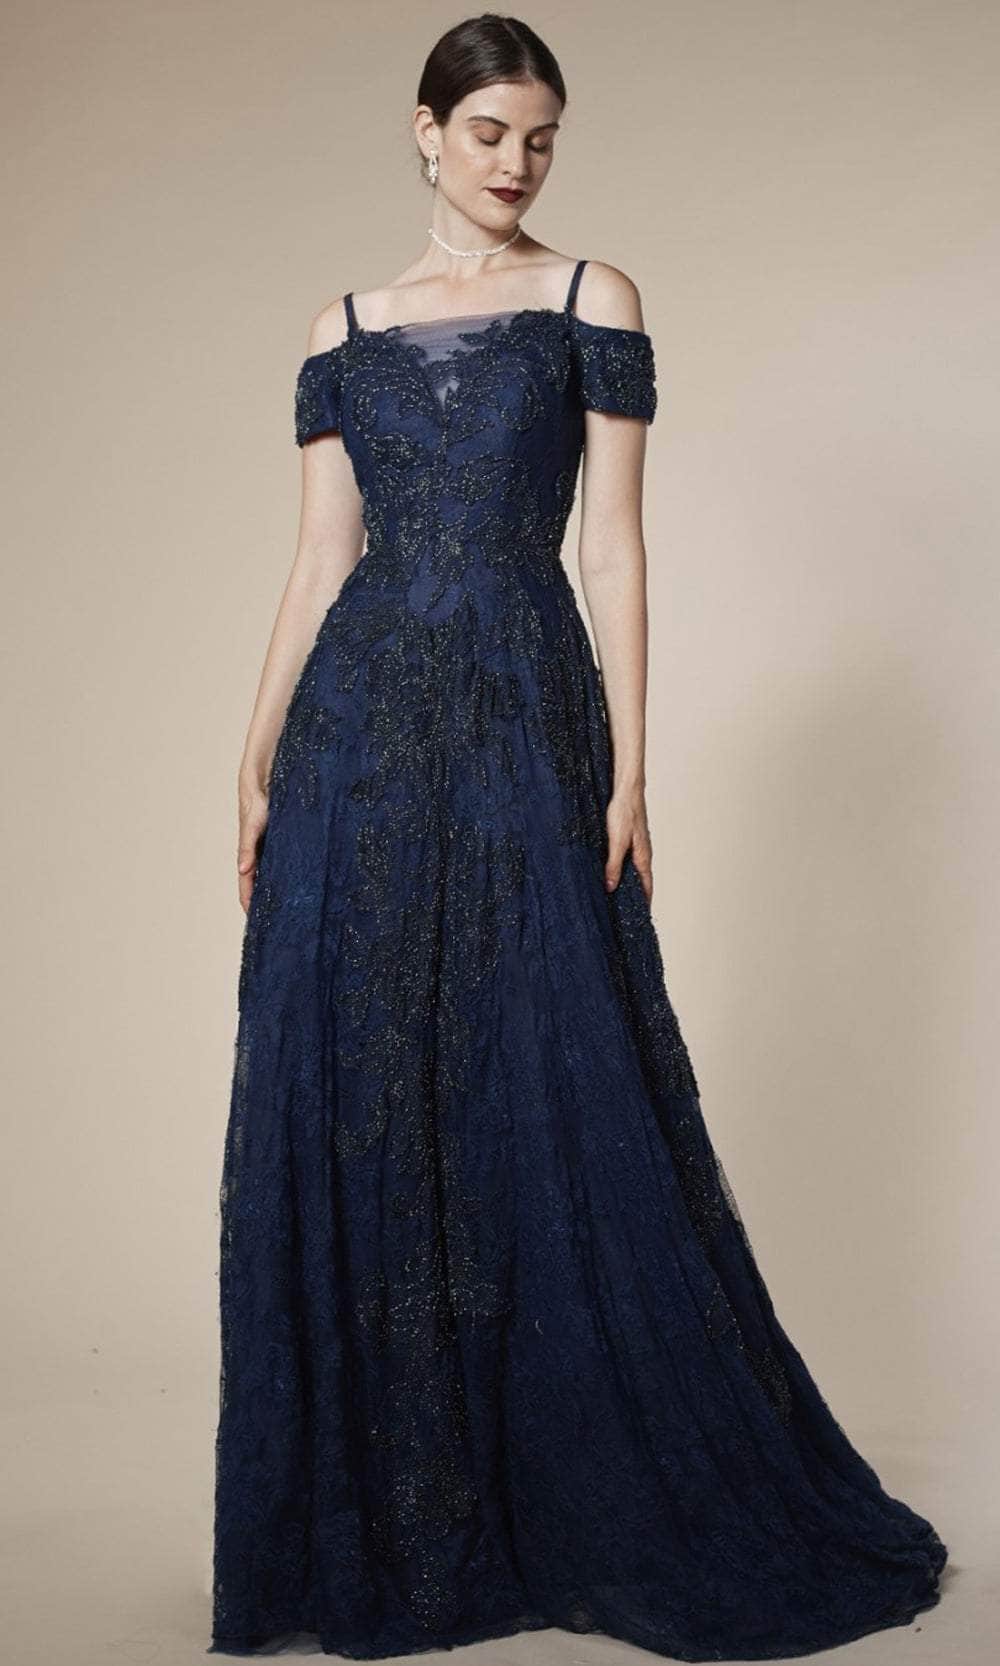 Cinderella Divine 5326 - Cold Shoulder Floral Lace Gown Special Occasion Dress 6 / Navy